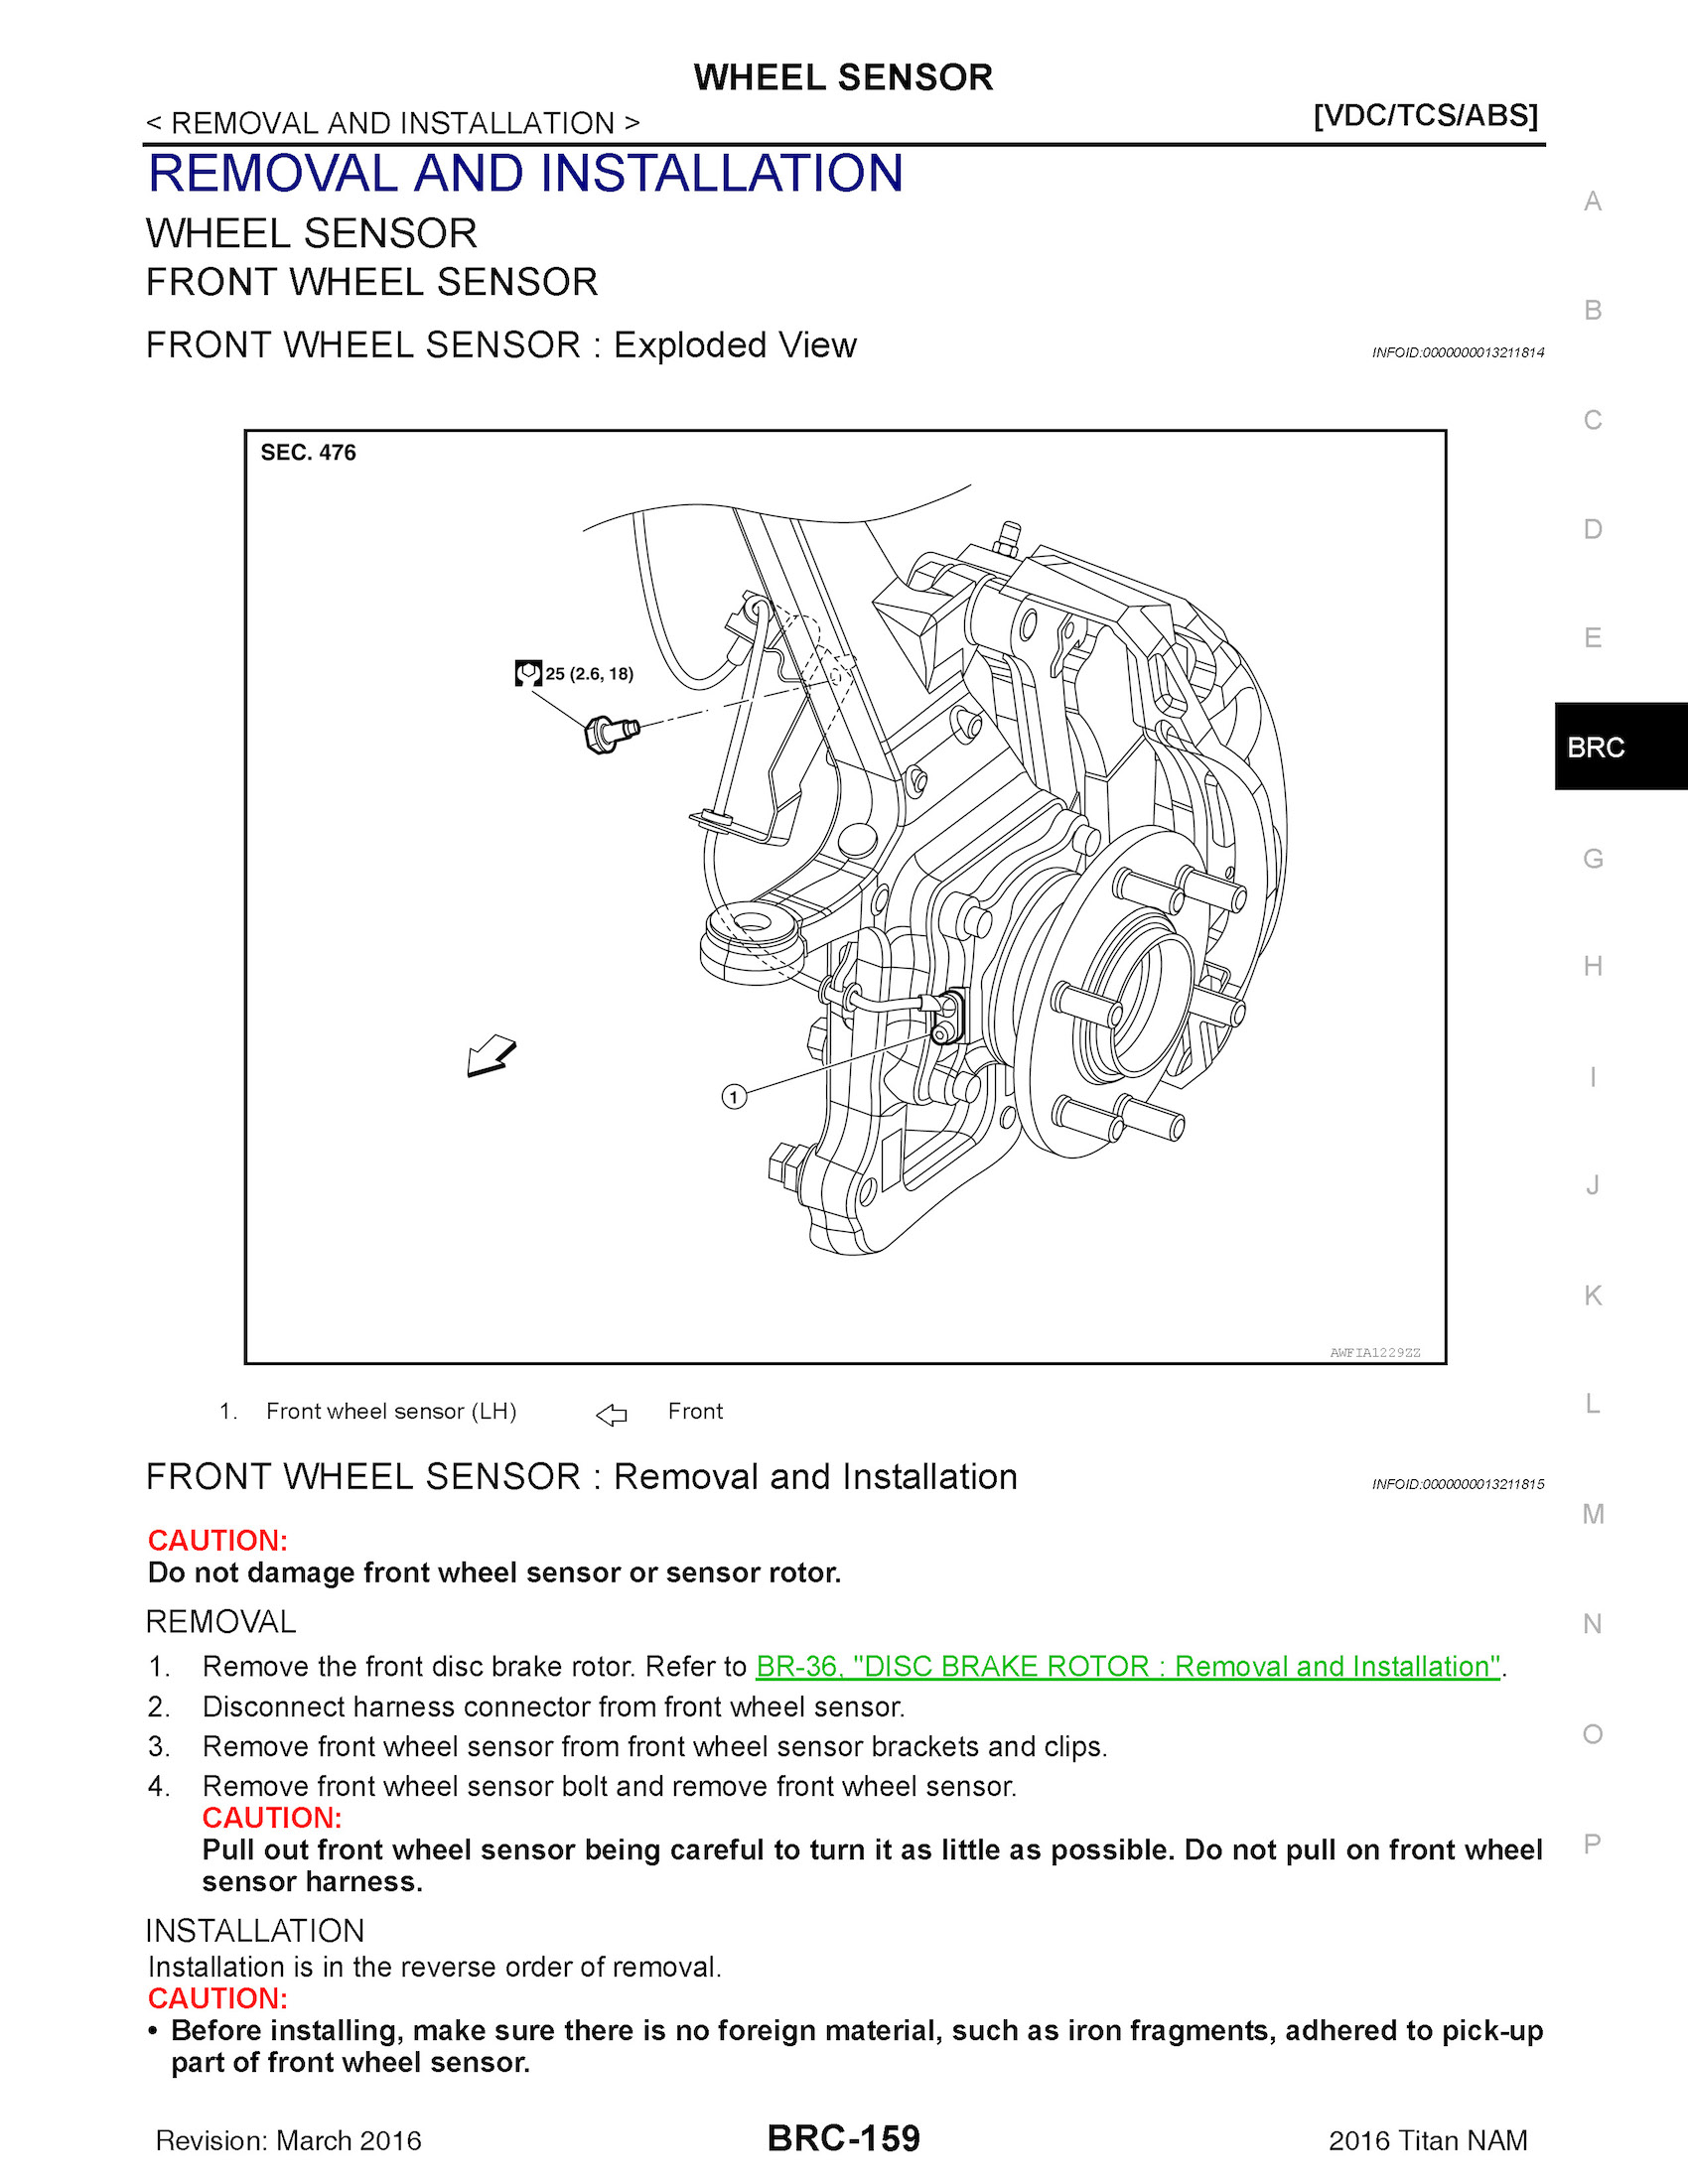 2016 Nissan Titan XD Repair Manual, Wheel Sensor Removal and Installation